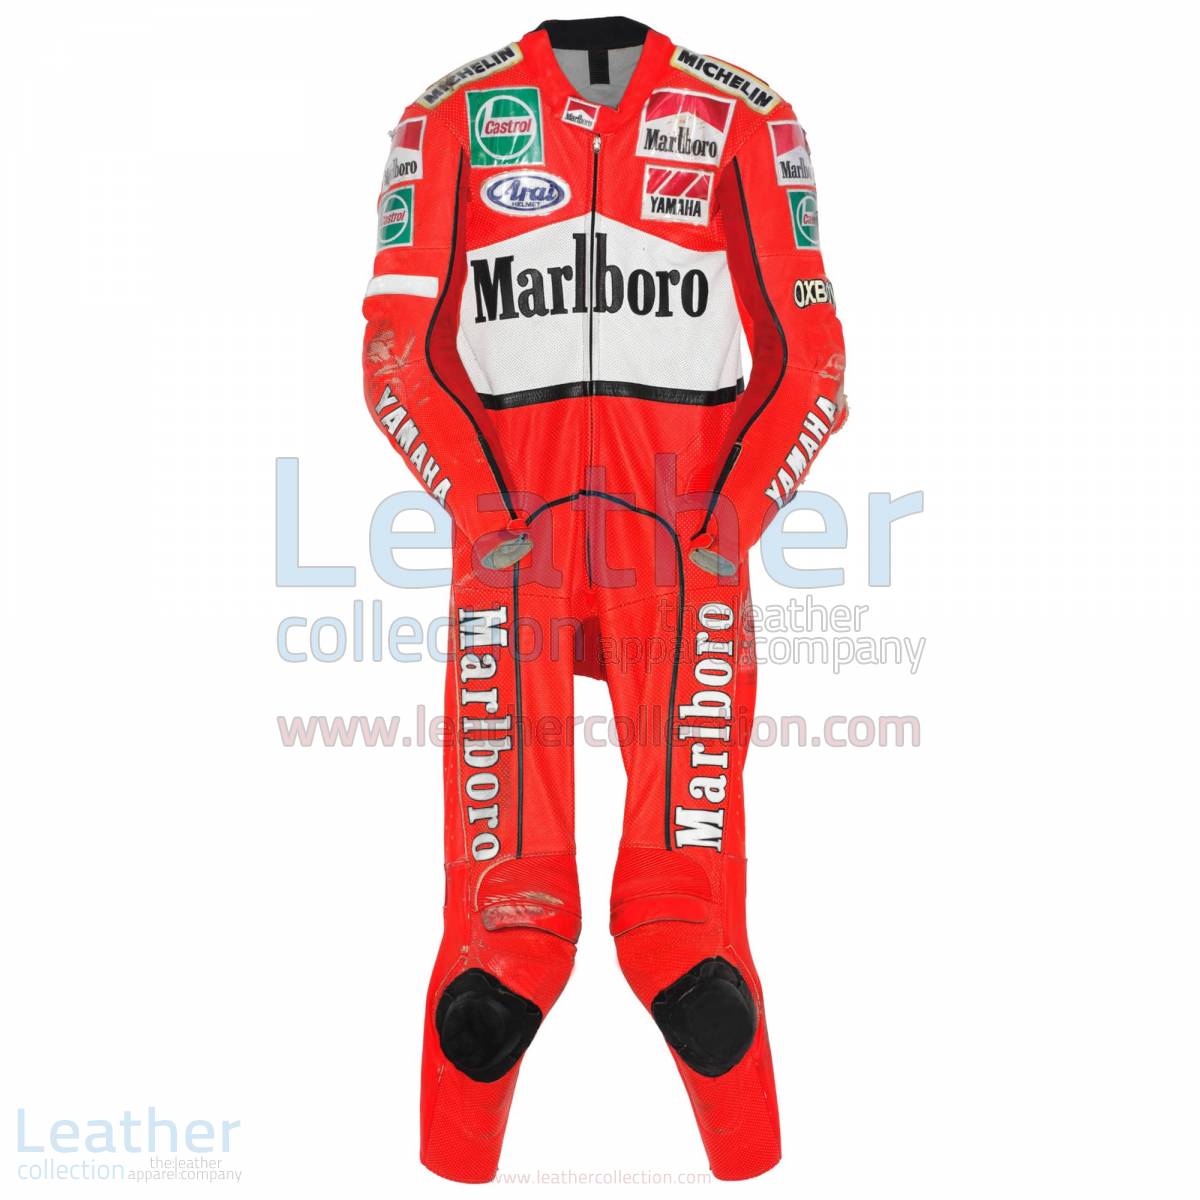 Jean Michel Bayle Marlboro Yamaha GP 1996 Suit